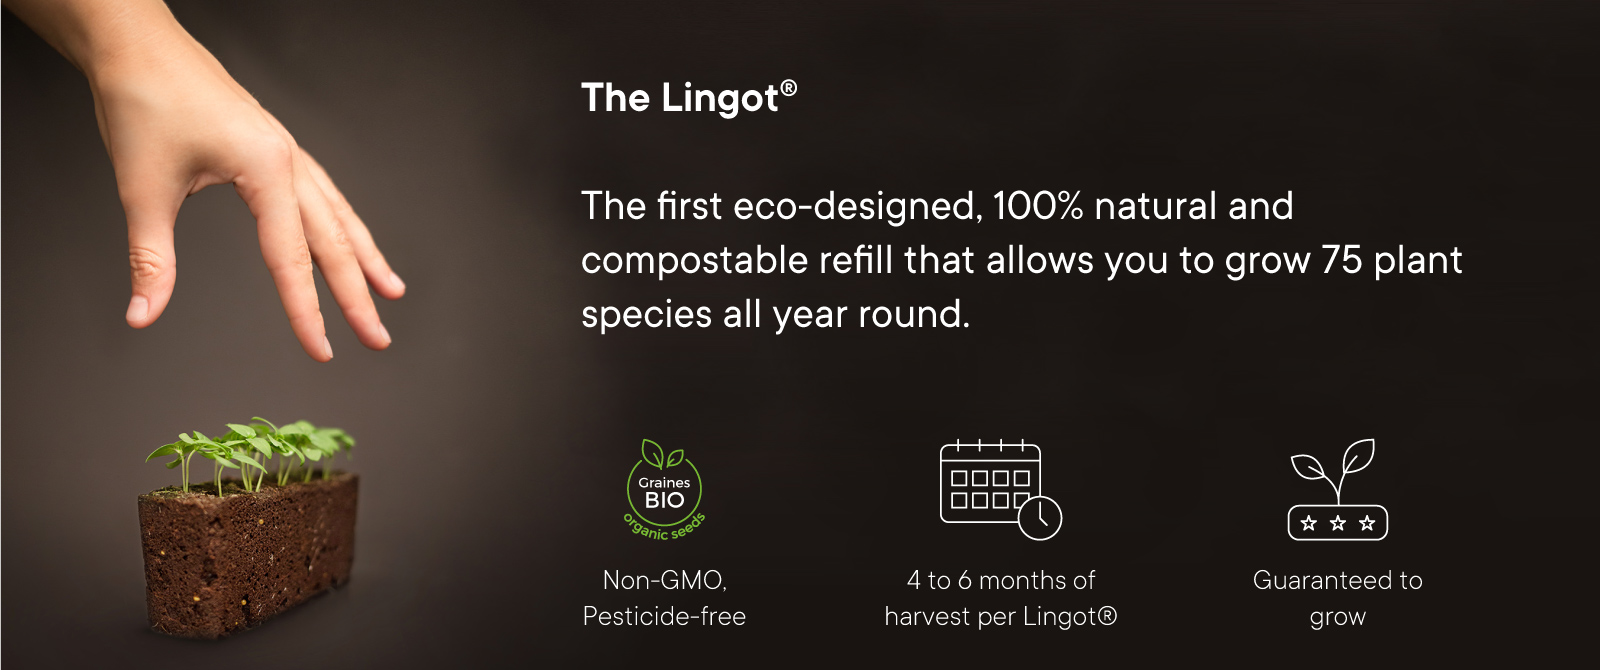 Lingot concept banner